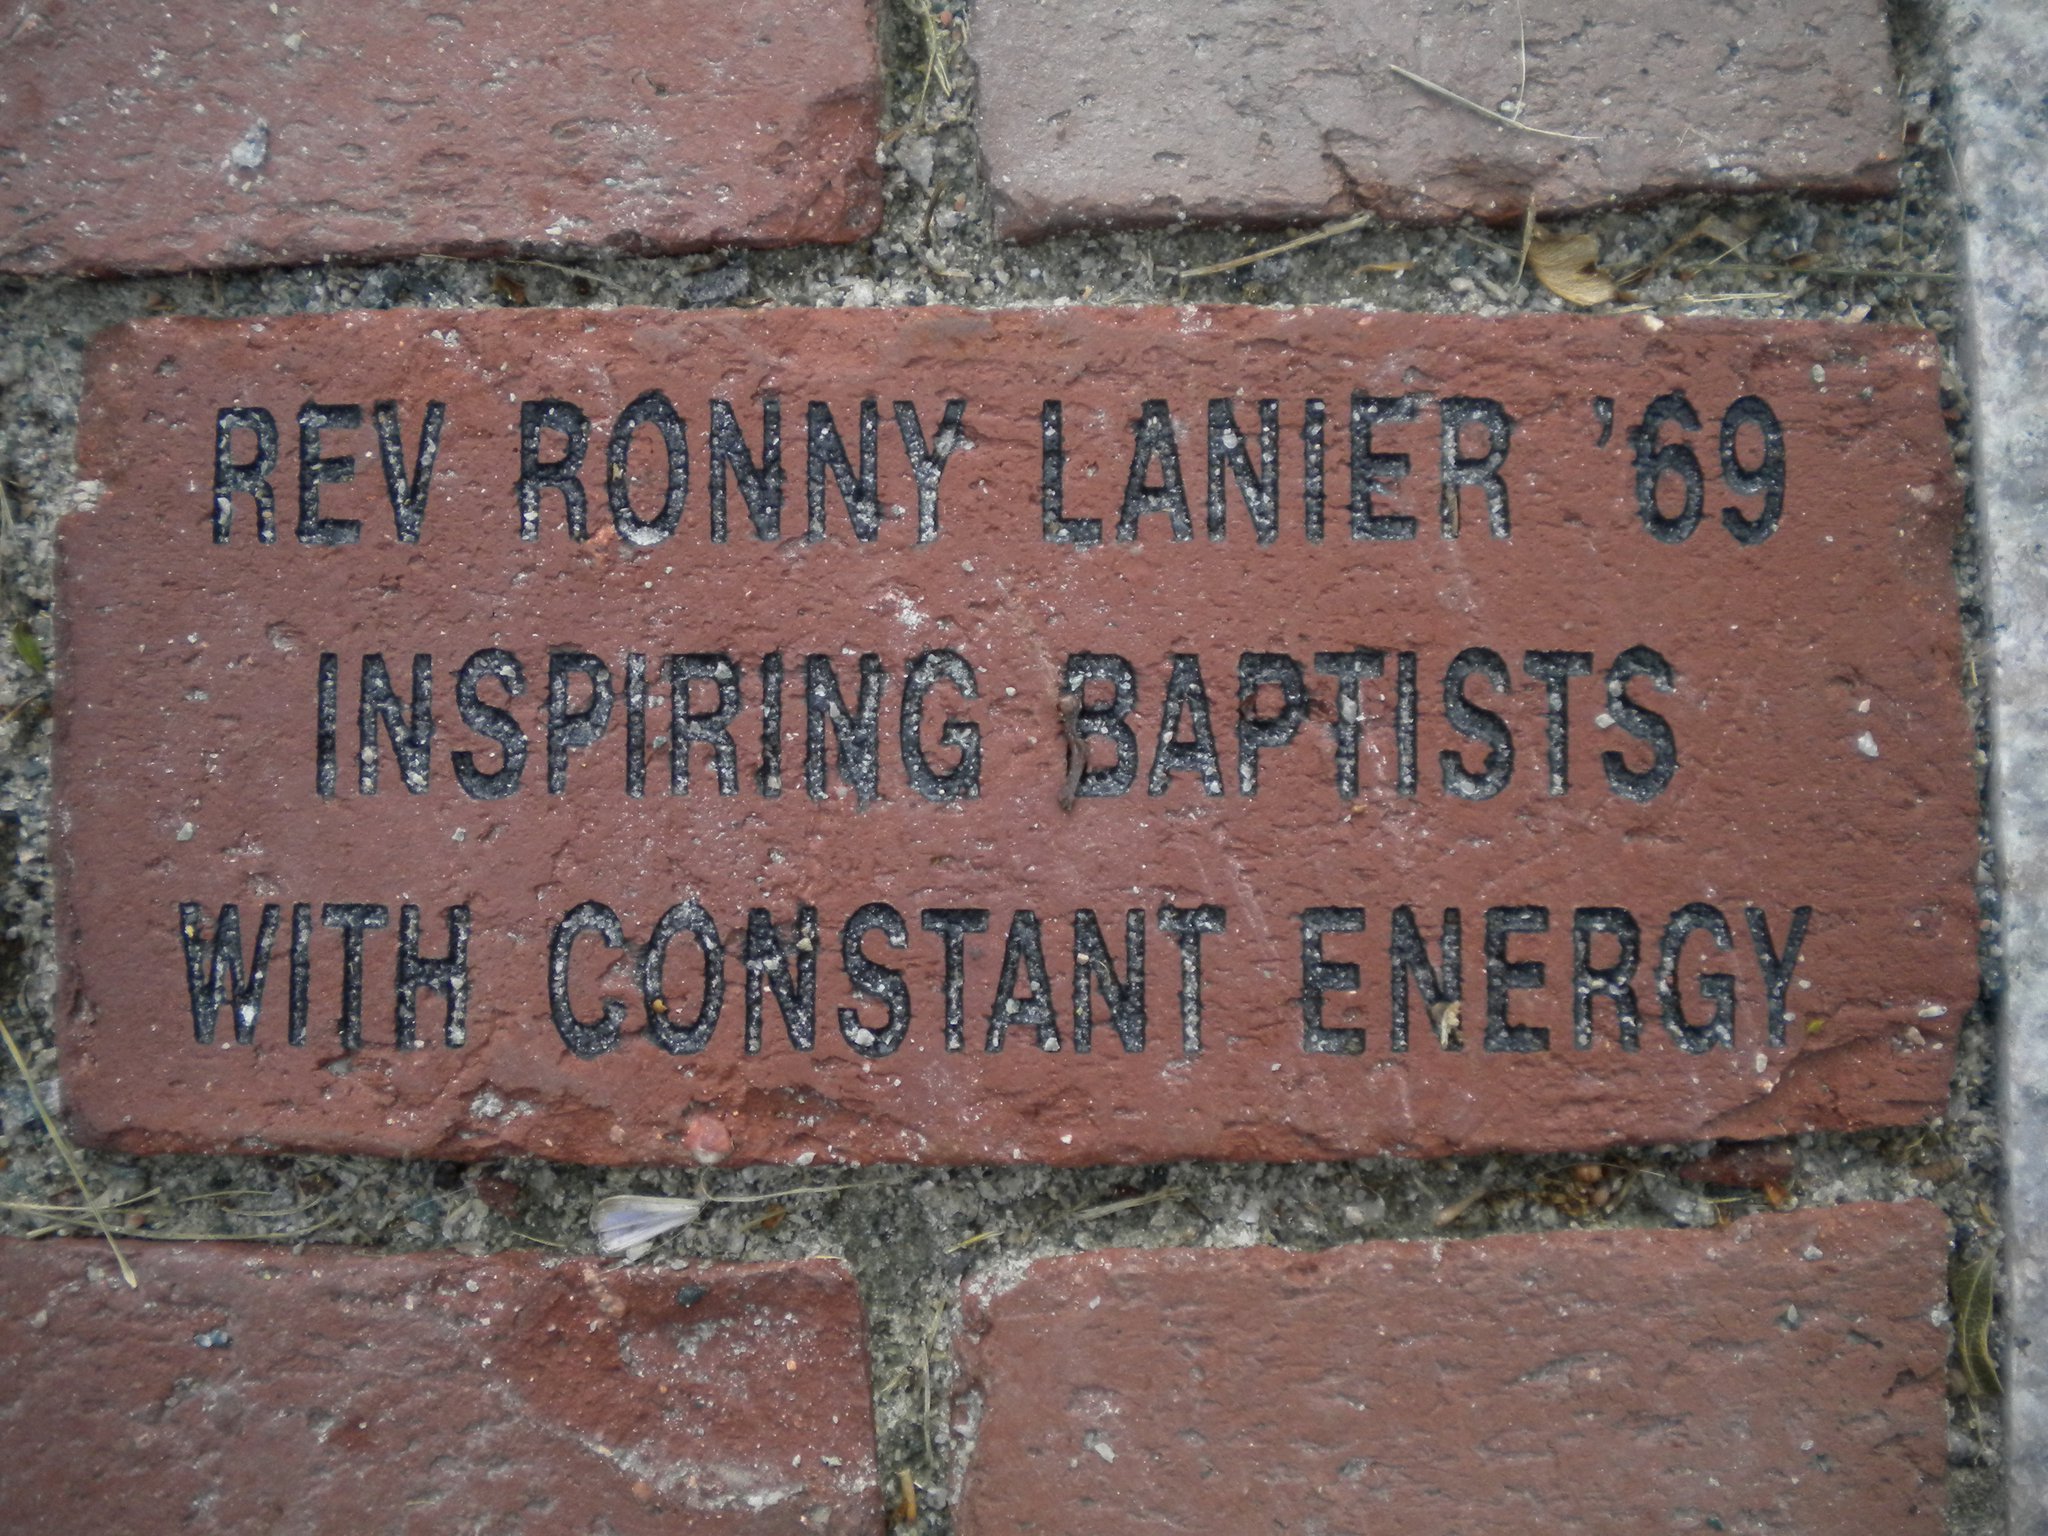 Andove Newton Brick in honor of Ronny